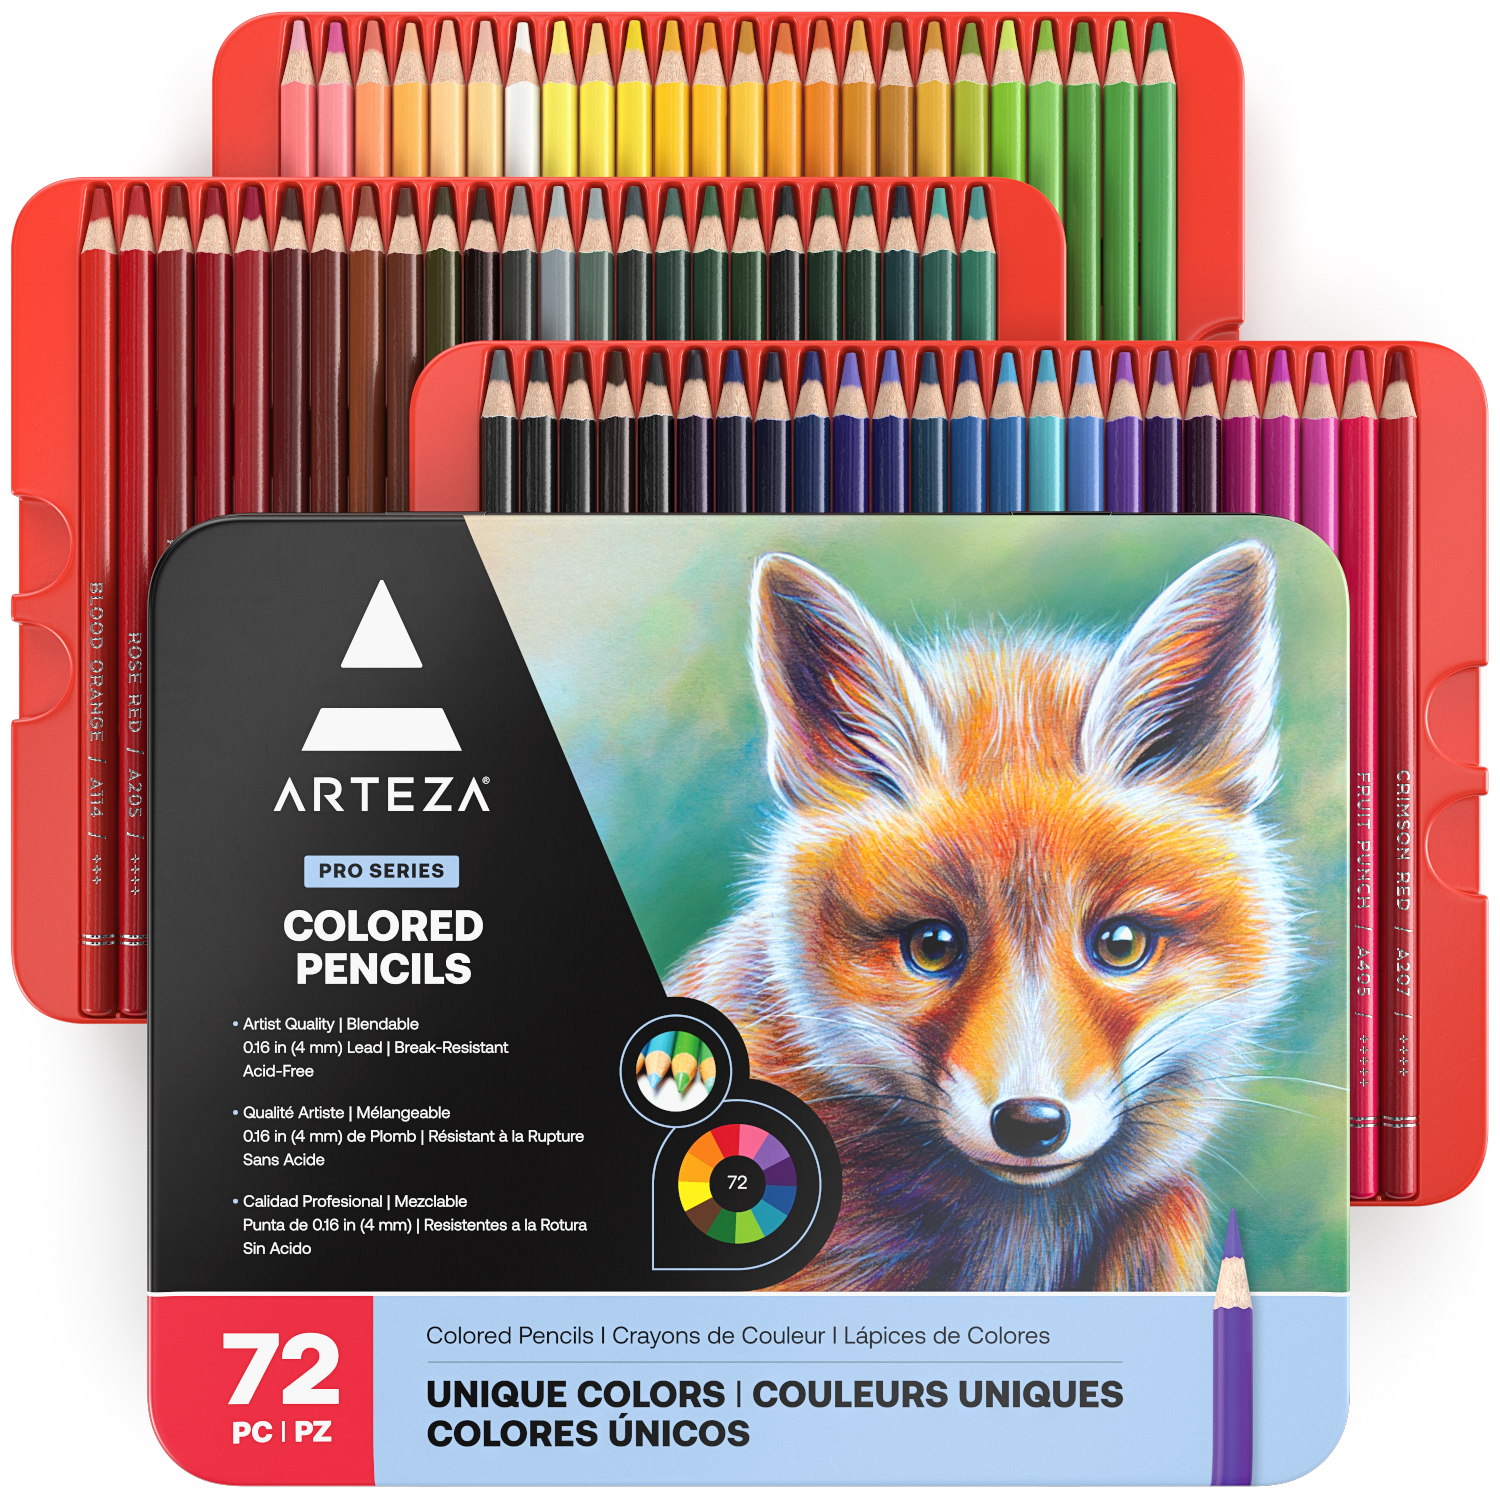 12 PCS/LOT Art Pencils Graphite Shading Pencils for Beginners & Pro  Artists,Professional Drawing Sketching Pencil Set